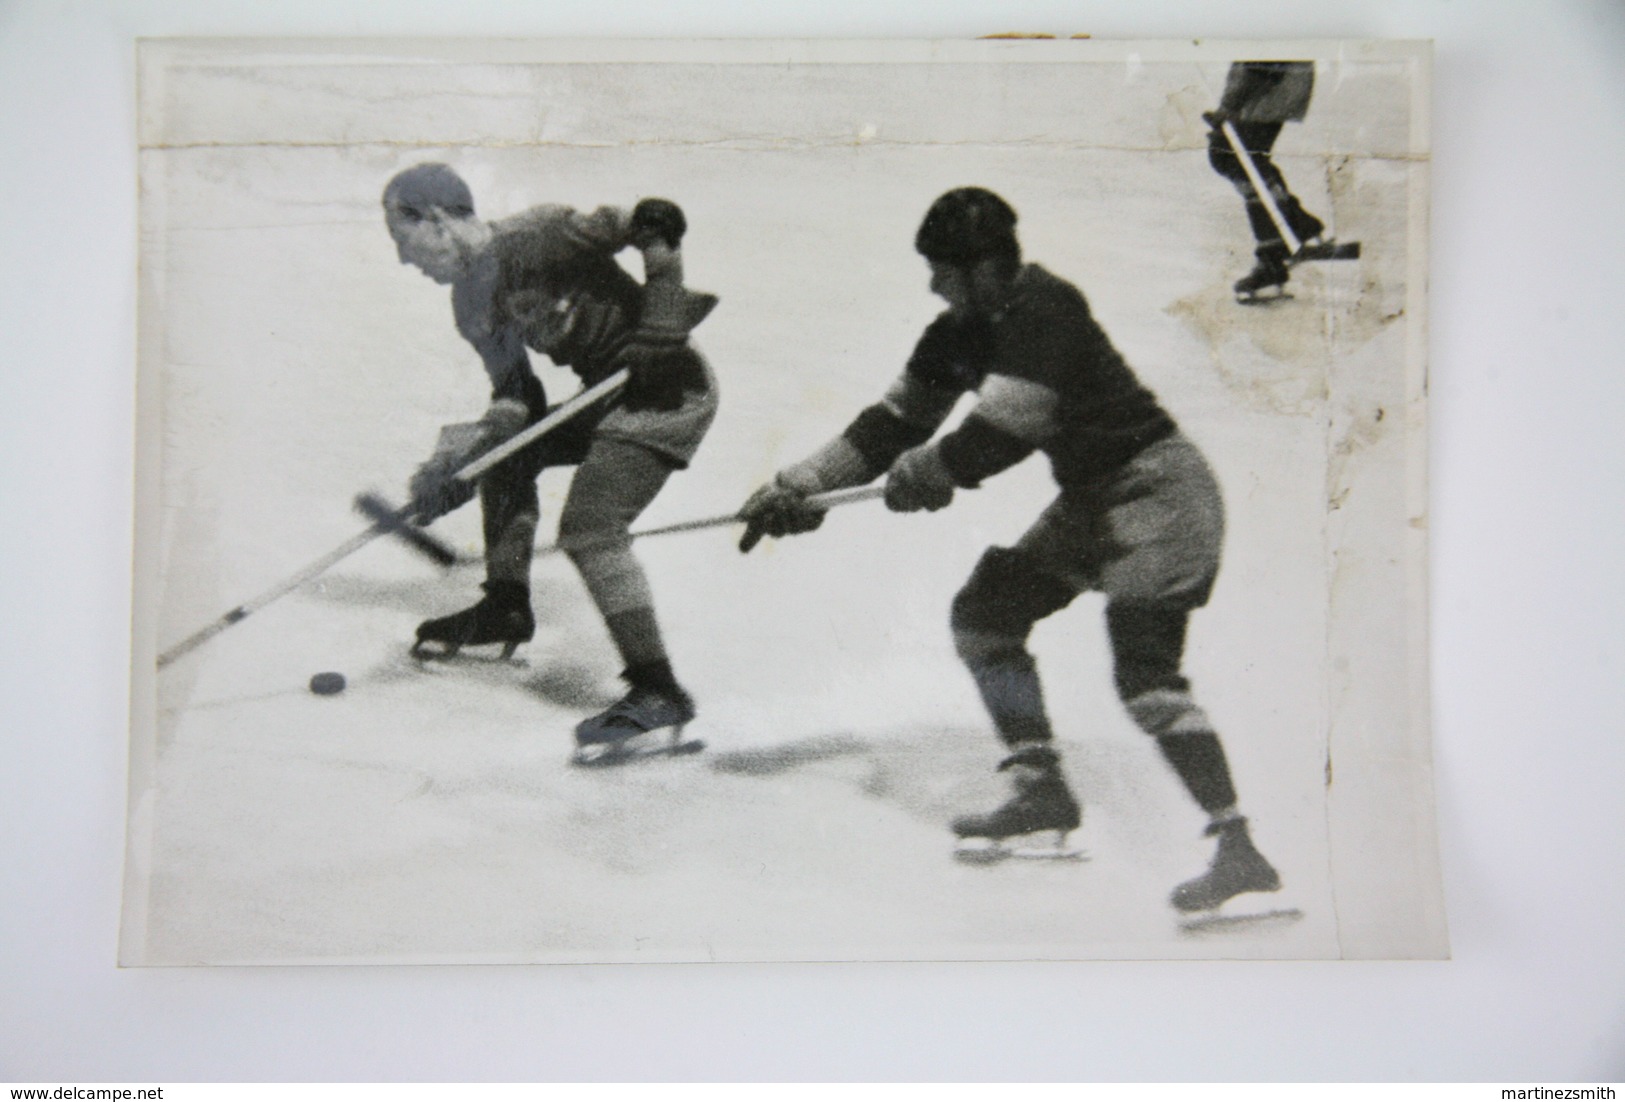 1942 Ice Hockey Official Press Photo - Match Stockholm Vs Berlin - Winter Sports